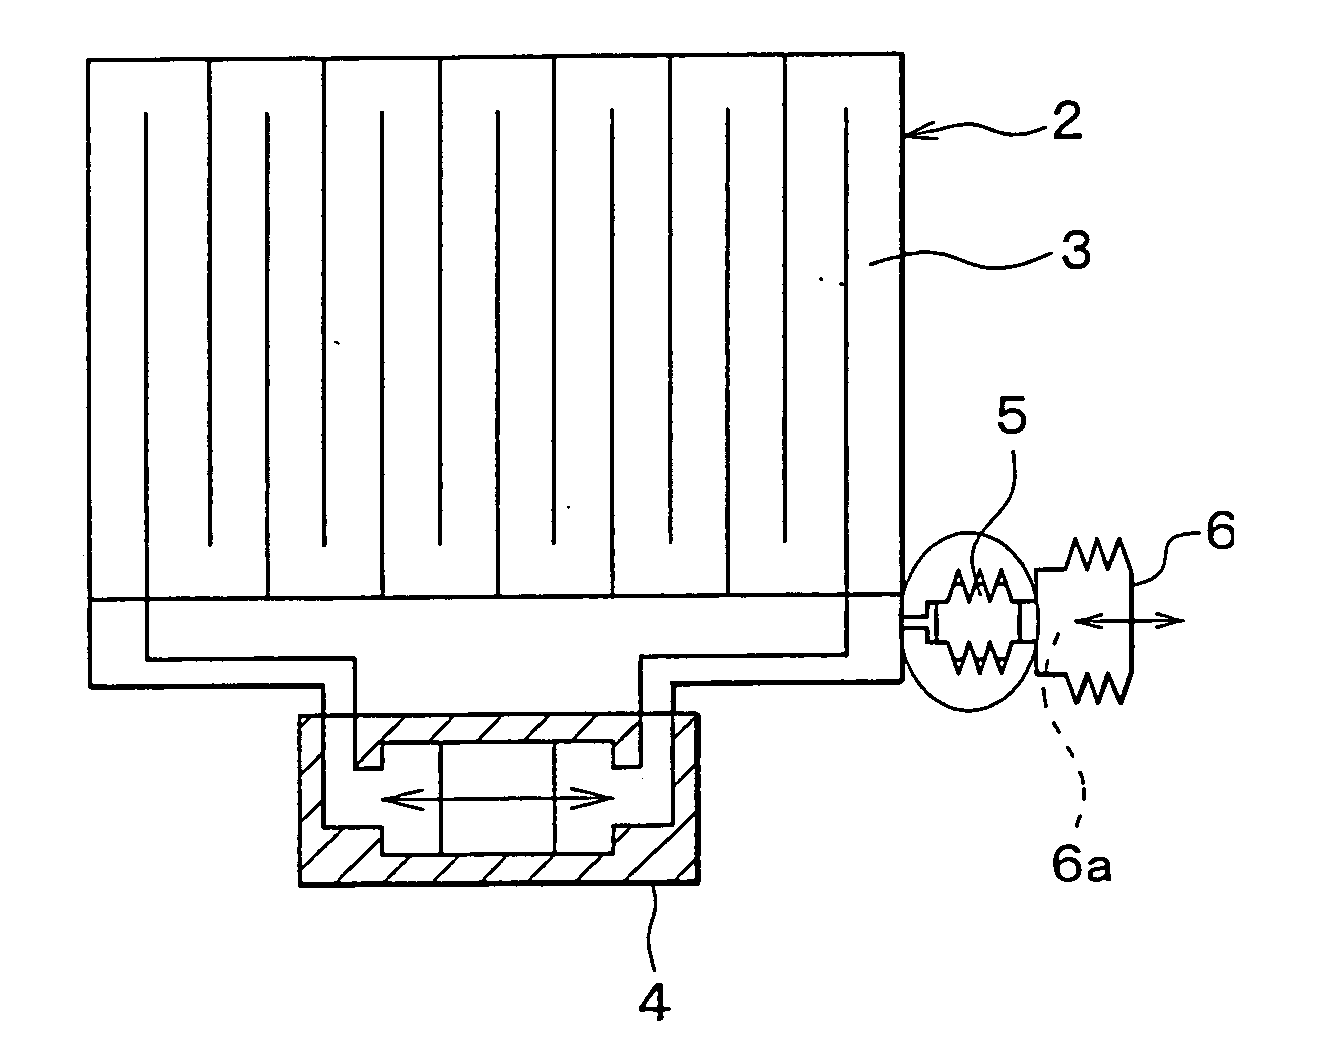 Counter-stream-mode oscillating-flow heat transport apparatus